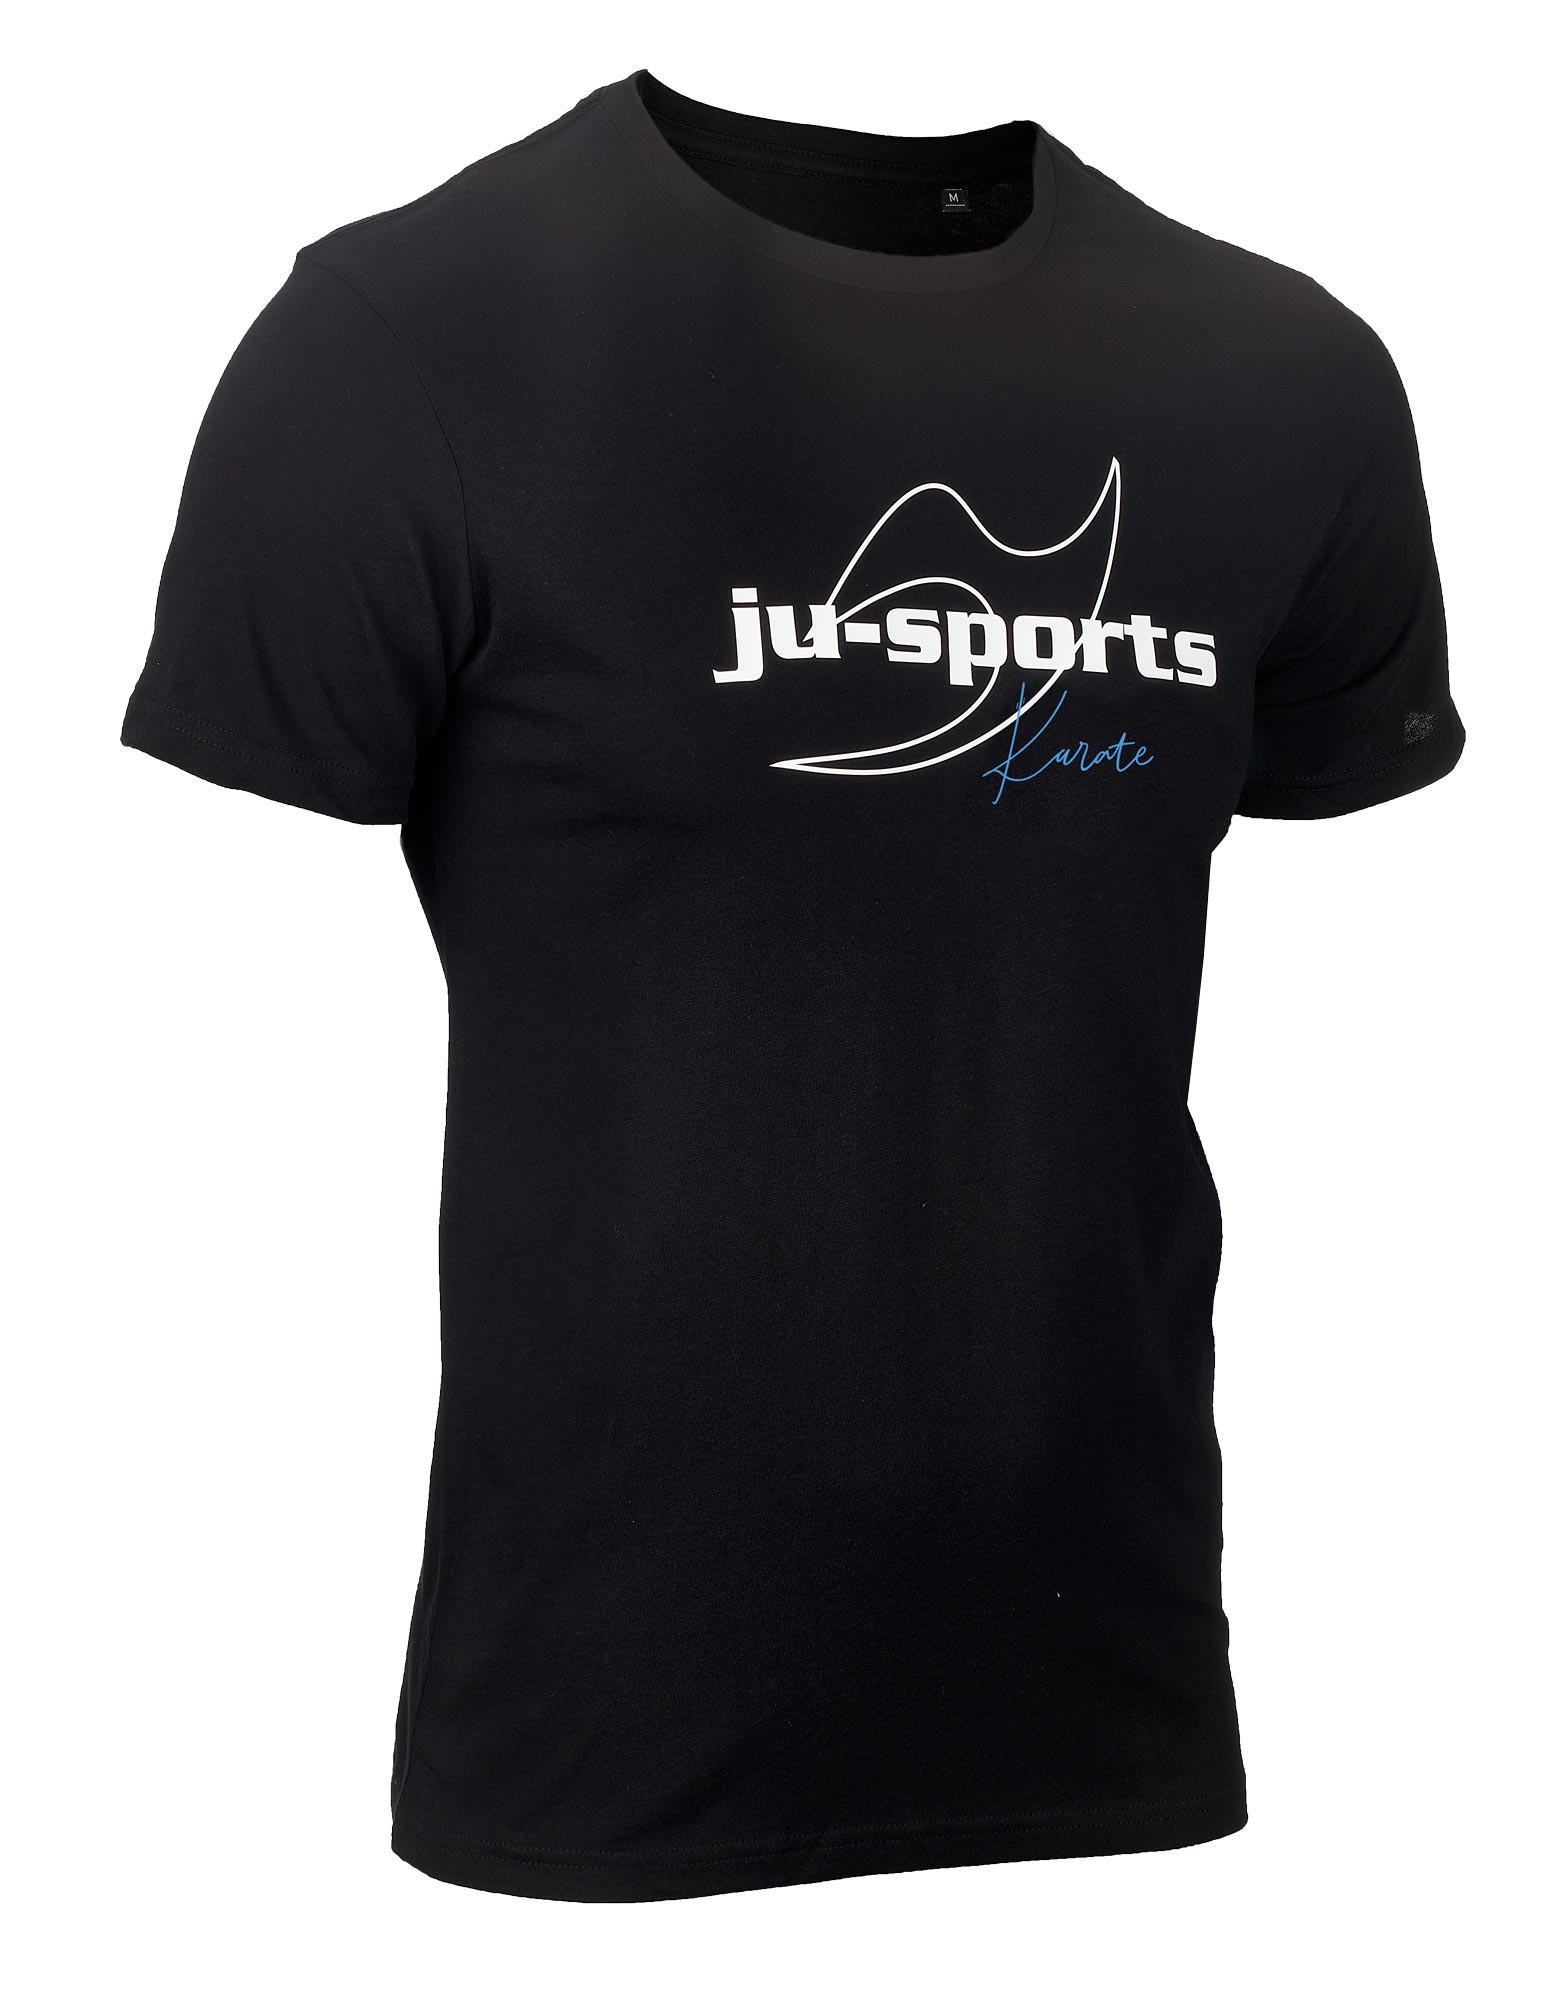 Ju-Sports Signature Line "Karate" T-Shirt